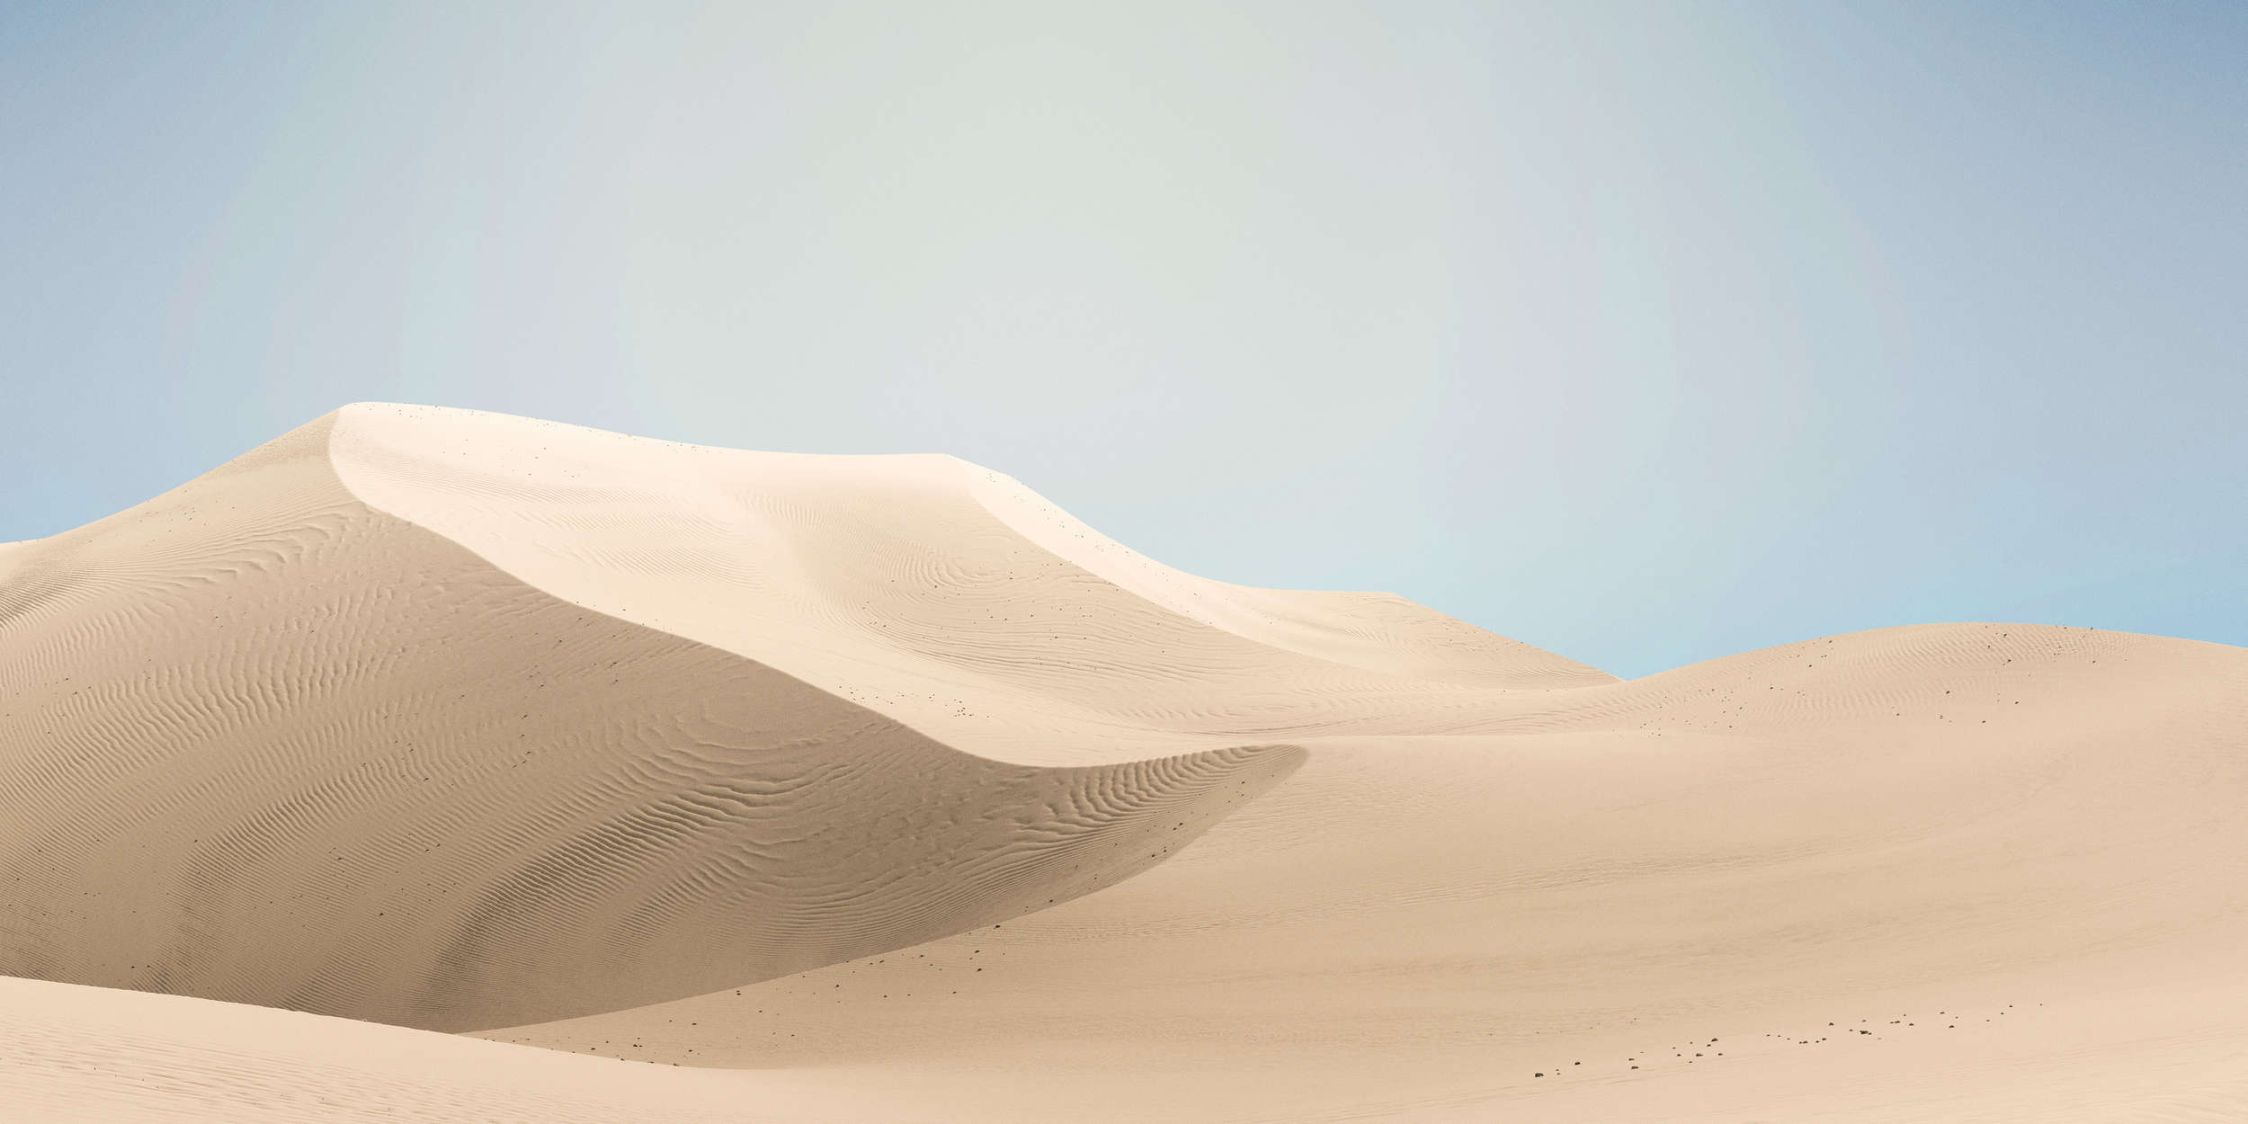             Photo wallpaper »dunes« - pastel-coloured desert landscape - Lightly textured non-woven fabric
        